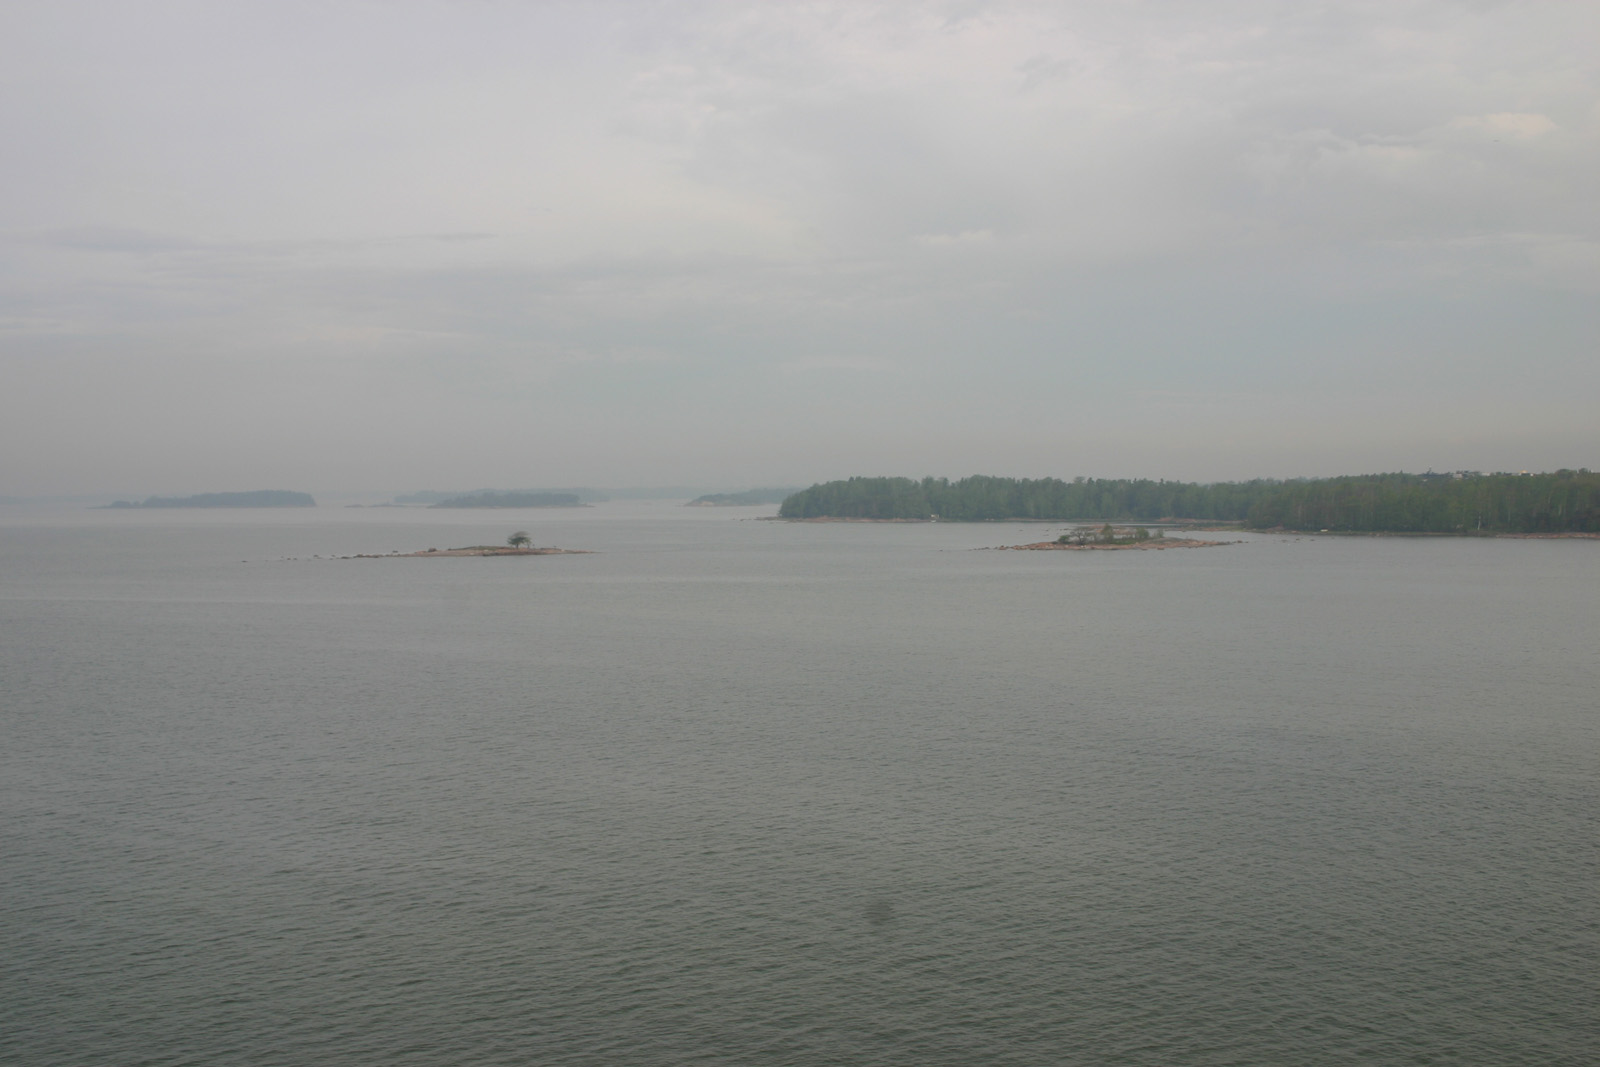 Foggy view on the bay as we depart Helsinki..